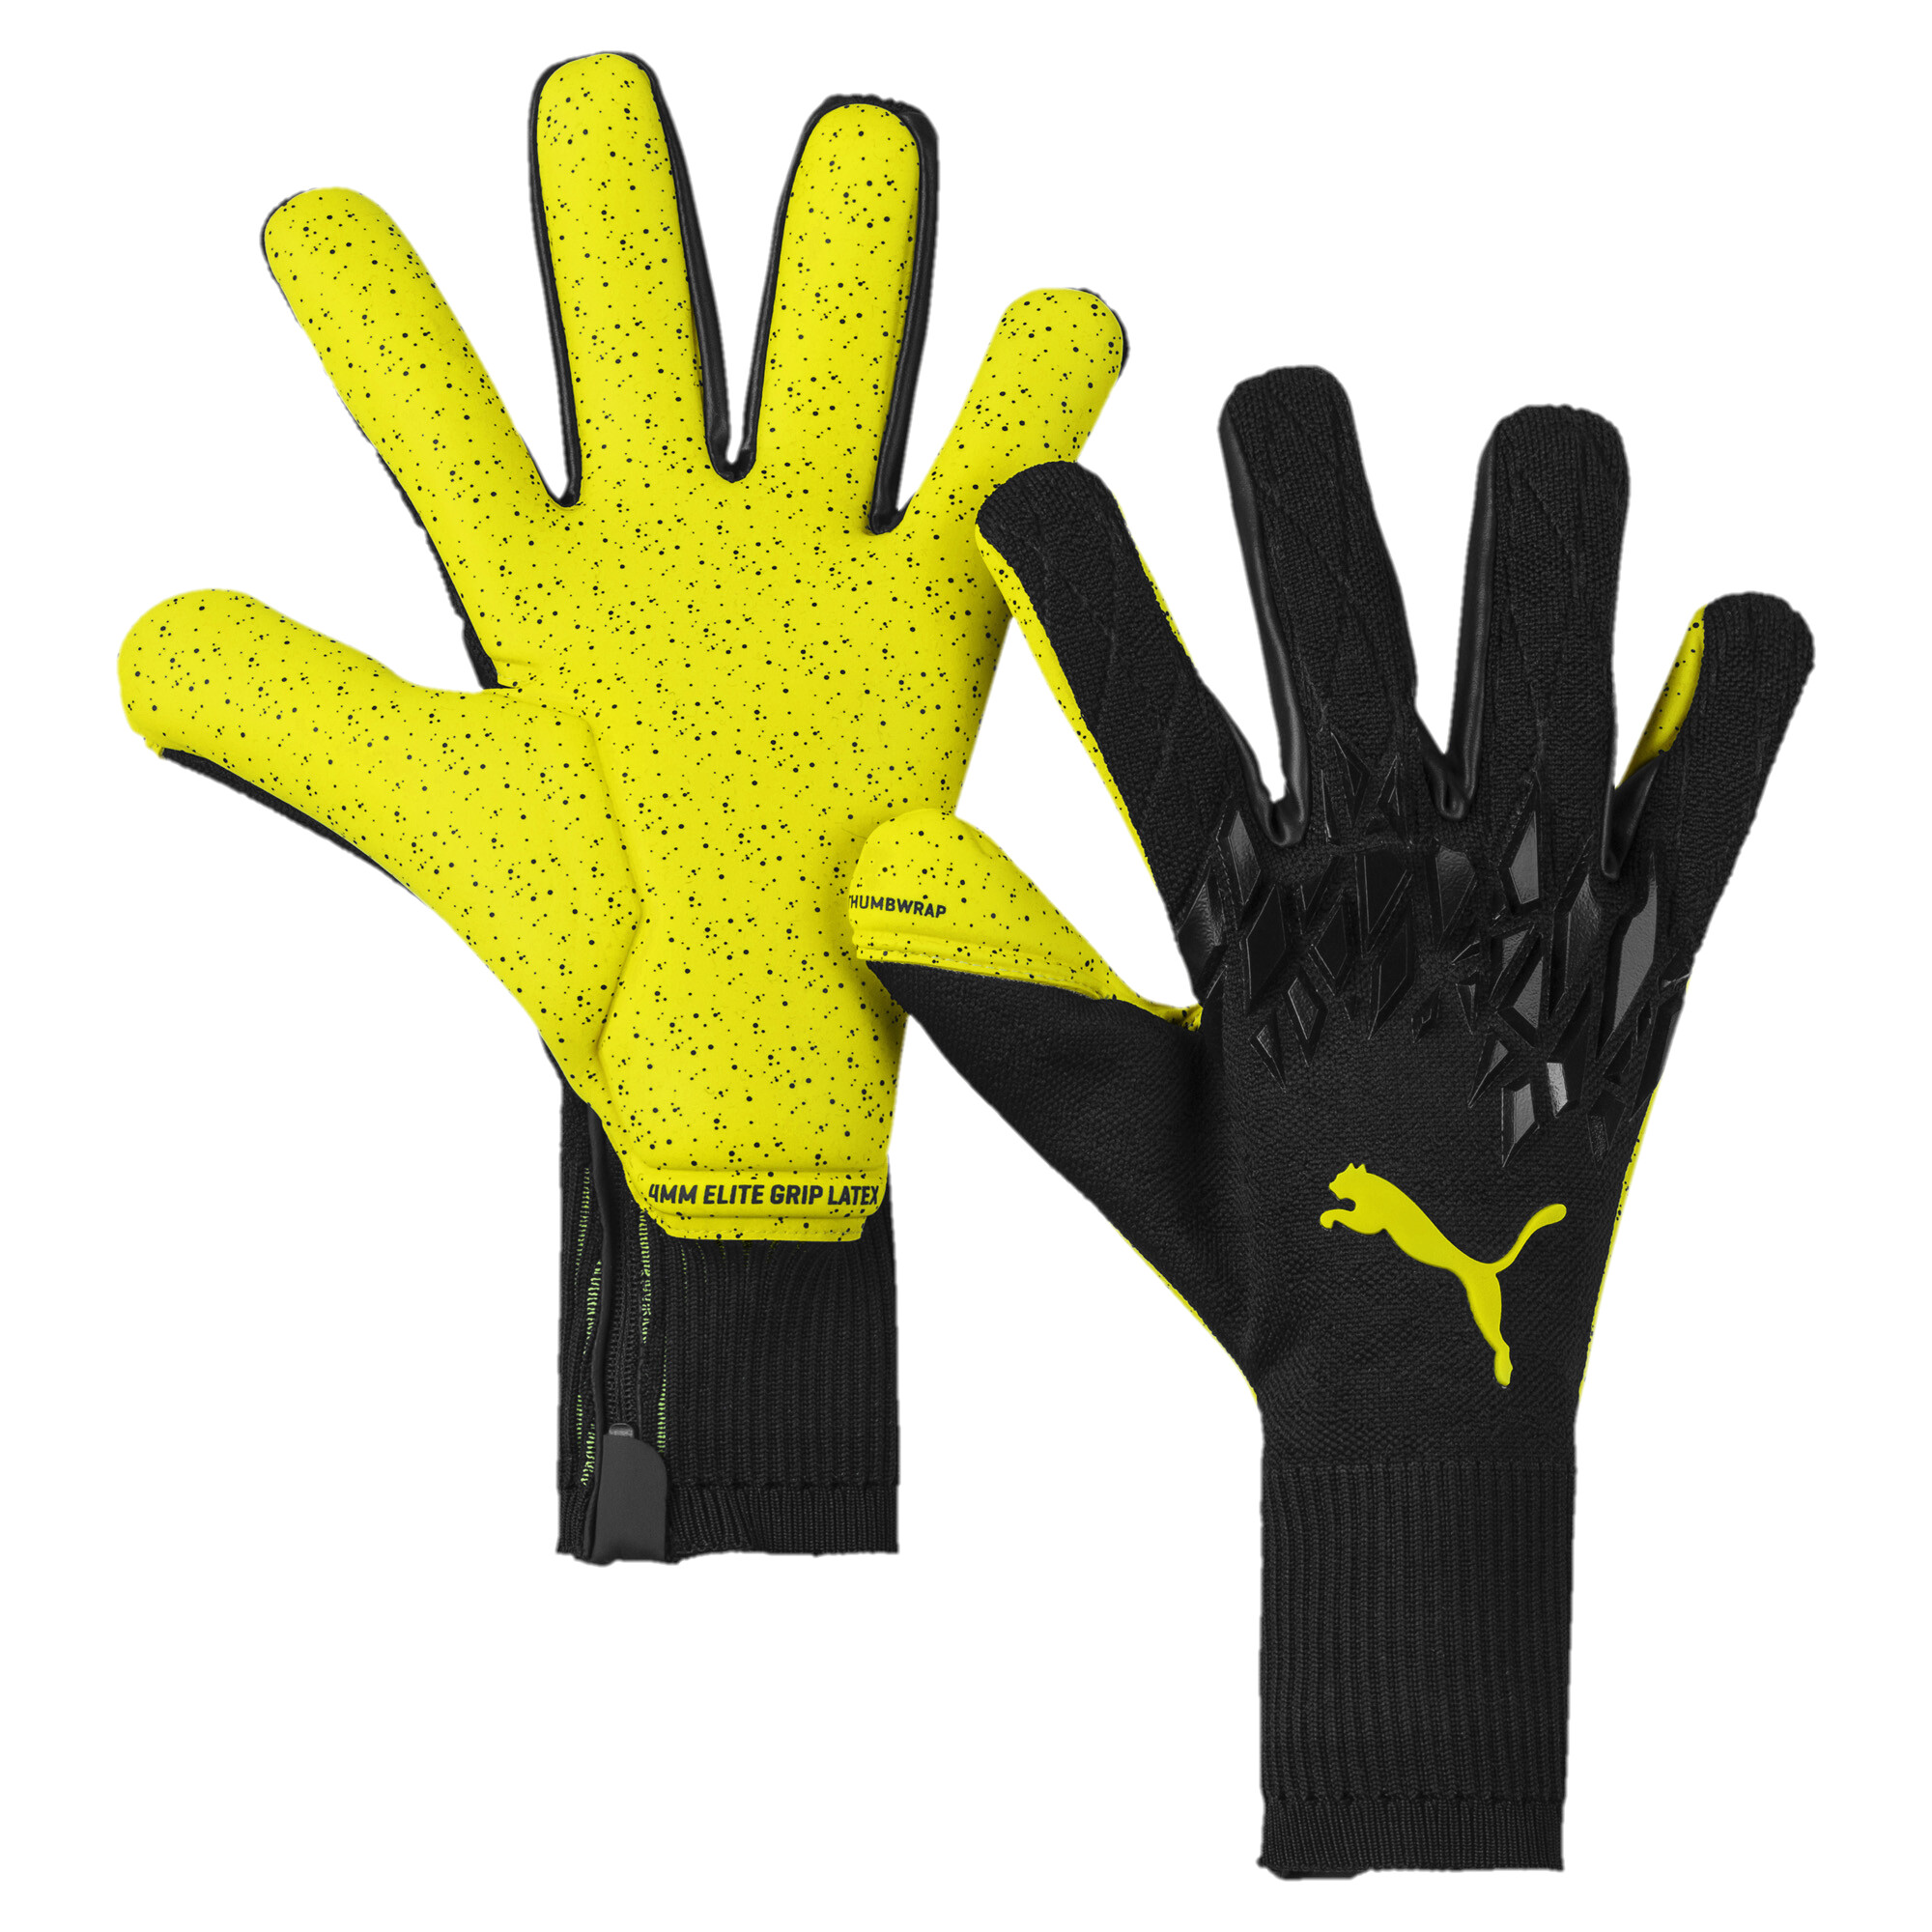 Puma FUTURE Grip 19.1 Football Goalkeeper Gloves, Black, Size 7, Accessories